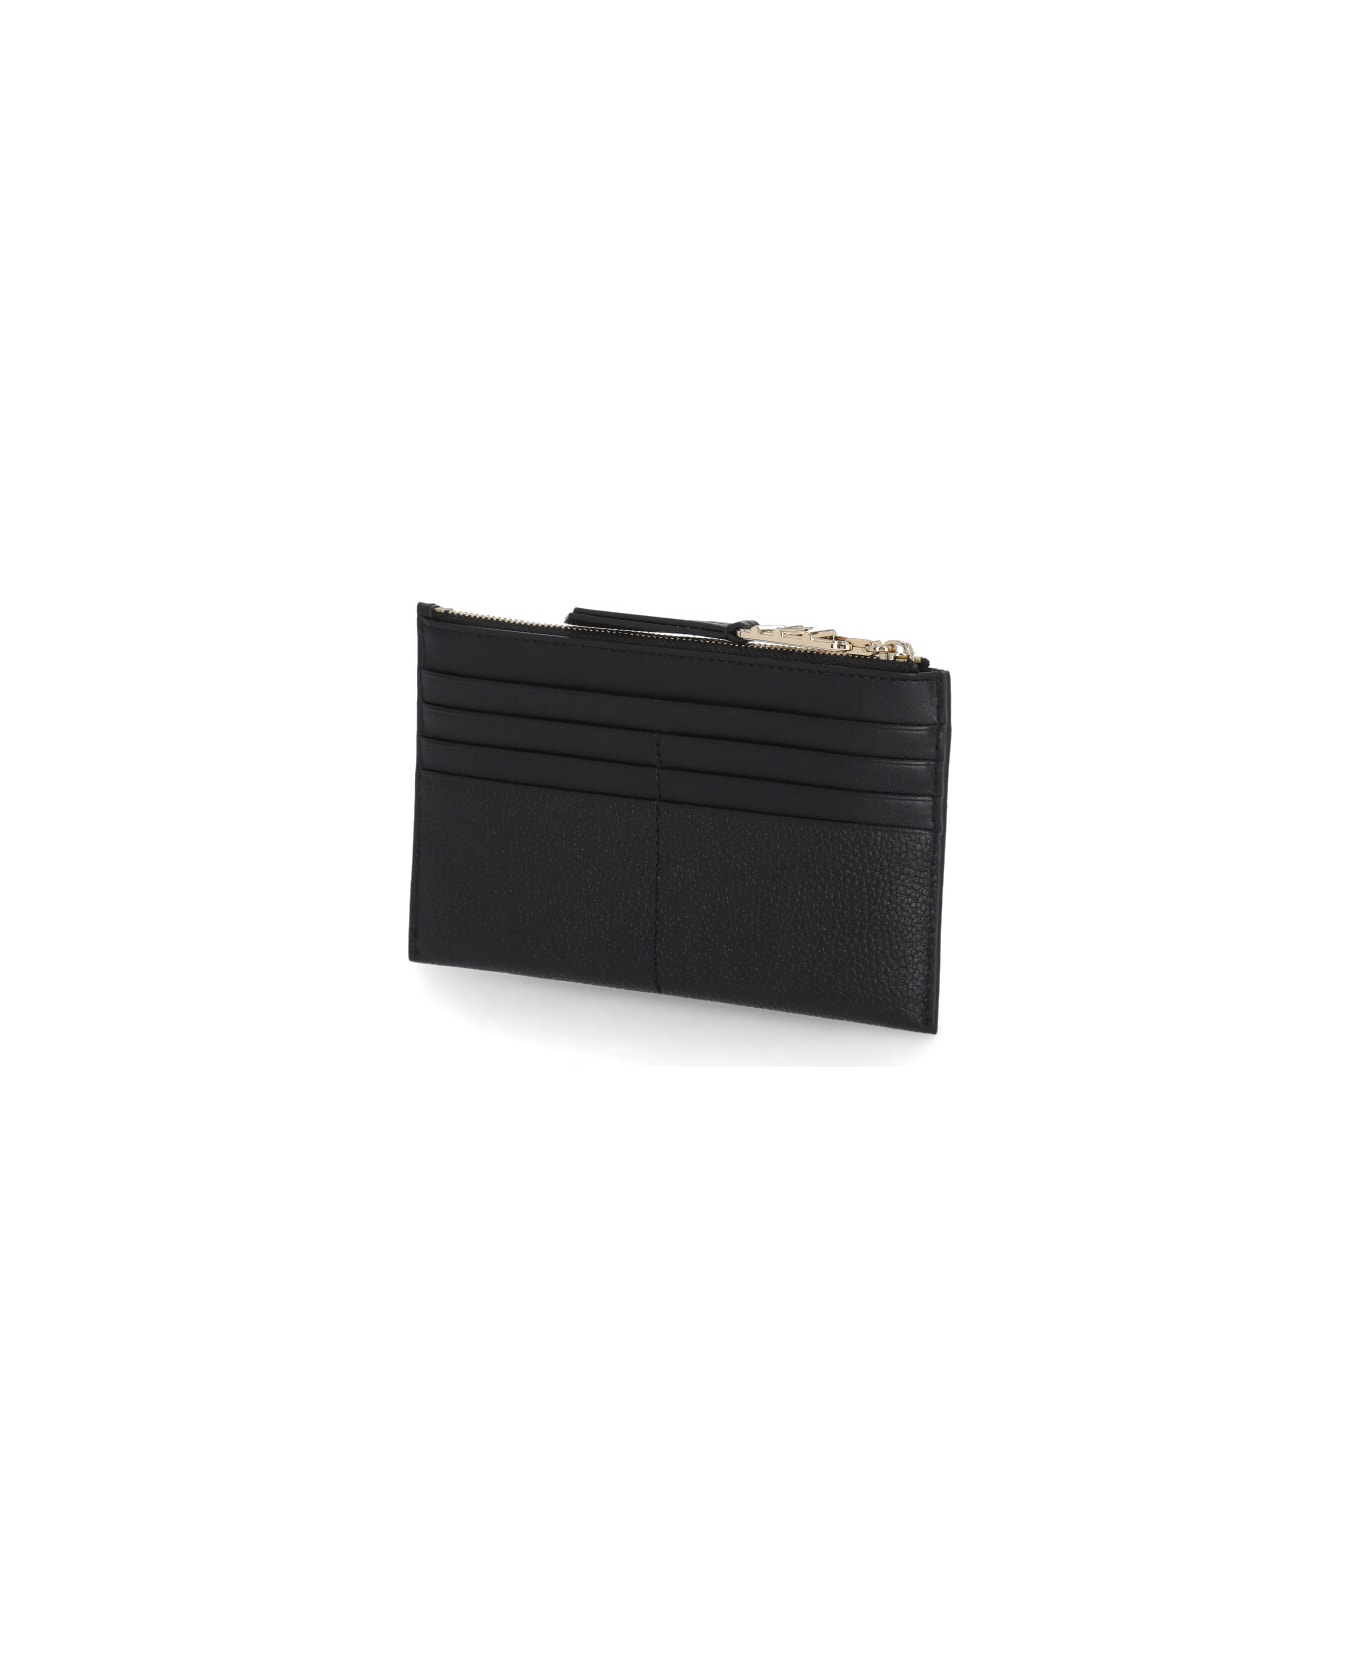 Michael Kors Leather Wallet - Black